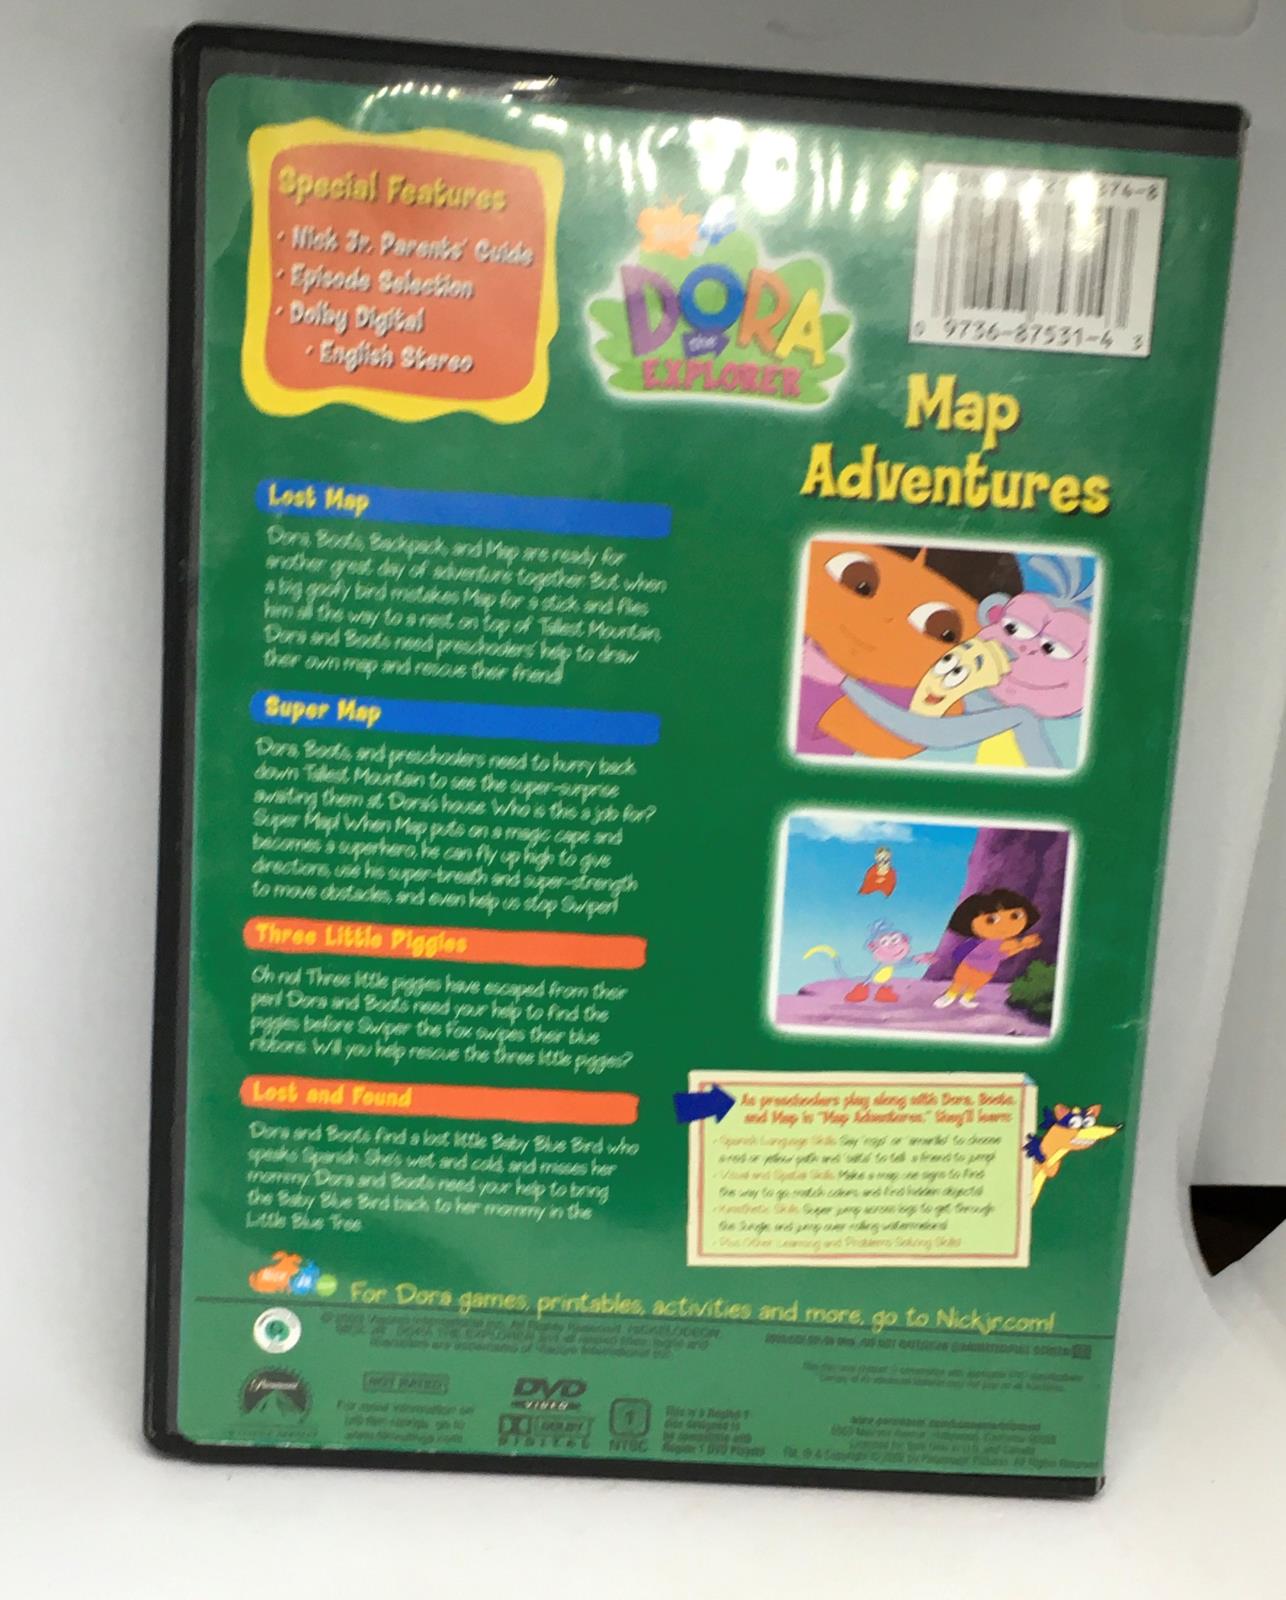 Dora the Explorer - Map Adventures (DVD, 2003) 97368753143 | eBay